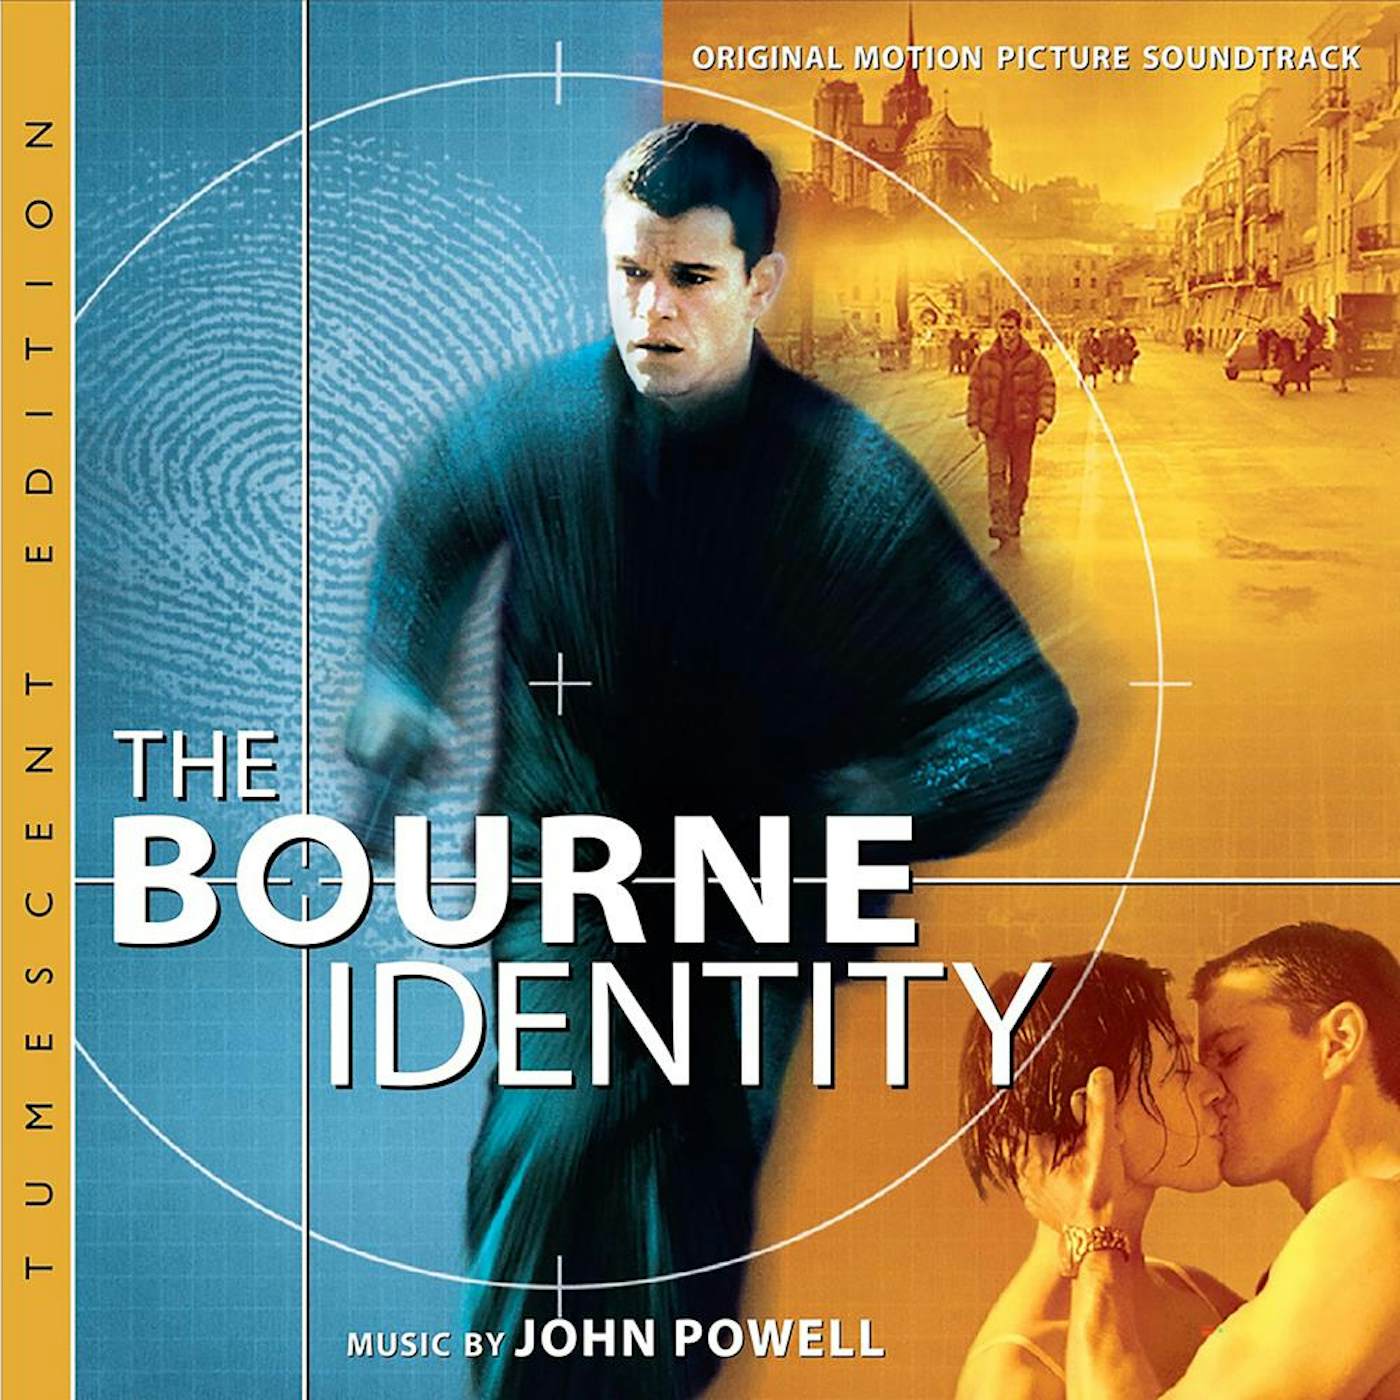 John Powell Bourne Identity / Original Soundtrack Vinyl Record